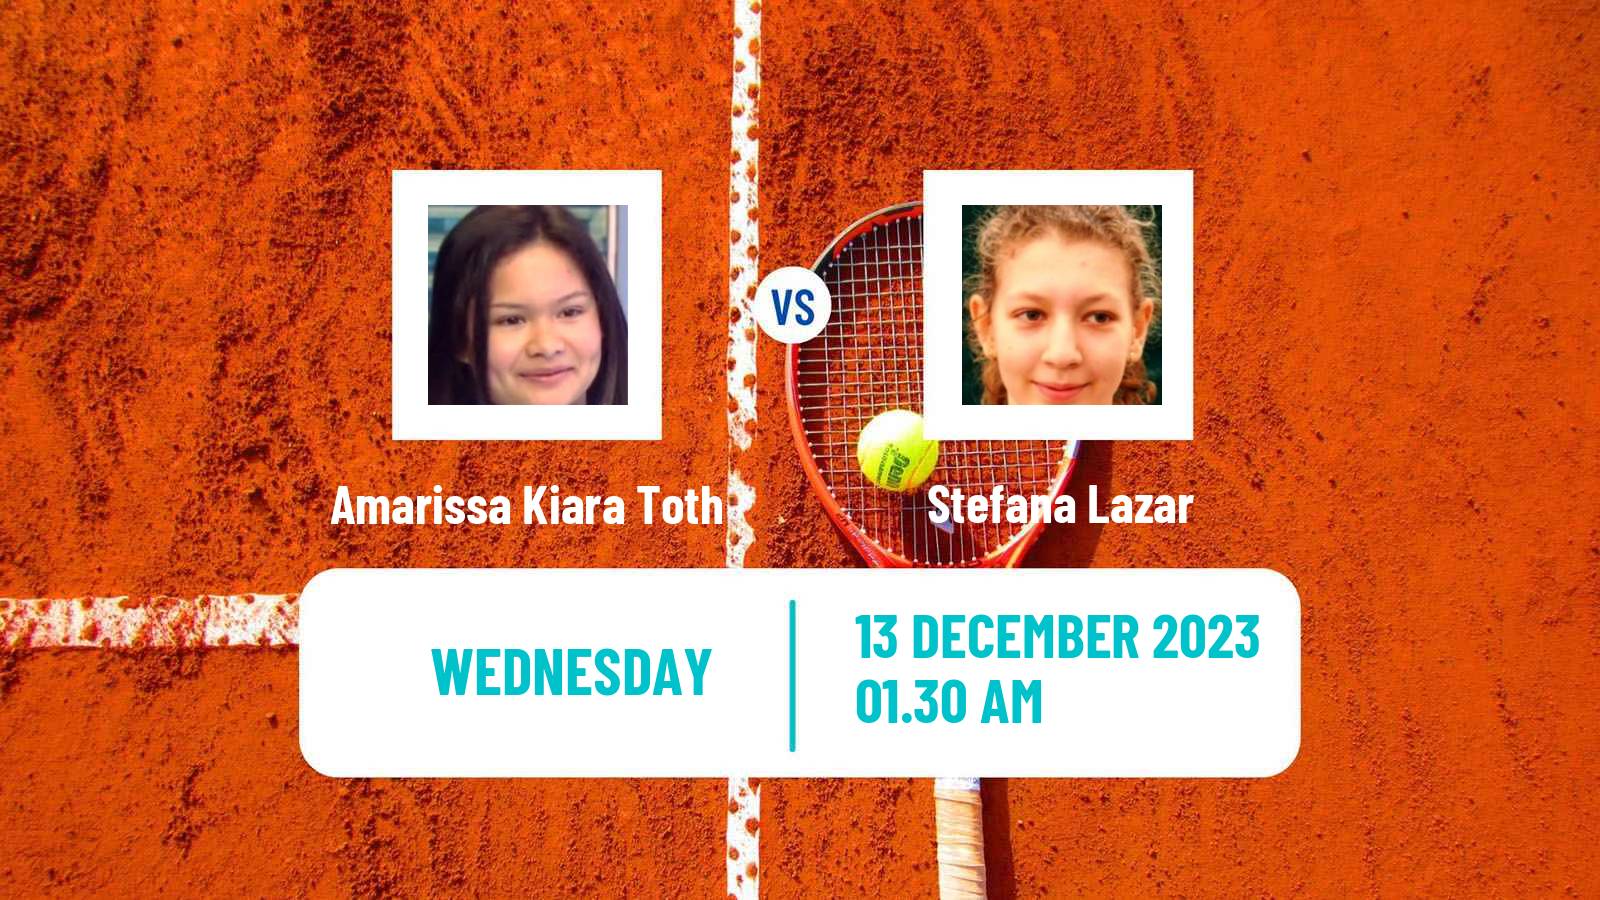 Tennis ITF W15 Antalya 22 Women Amarissa Kiara Toth - Stefana Lazar